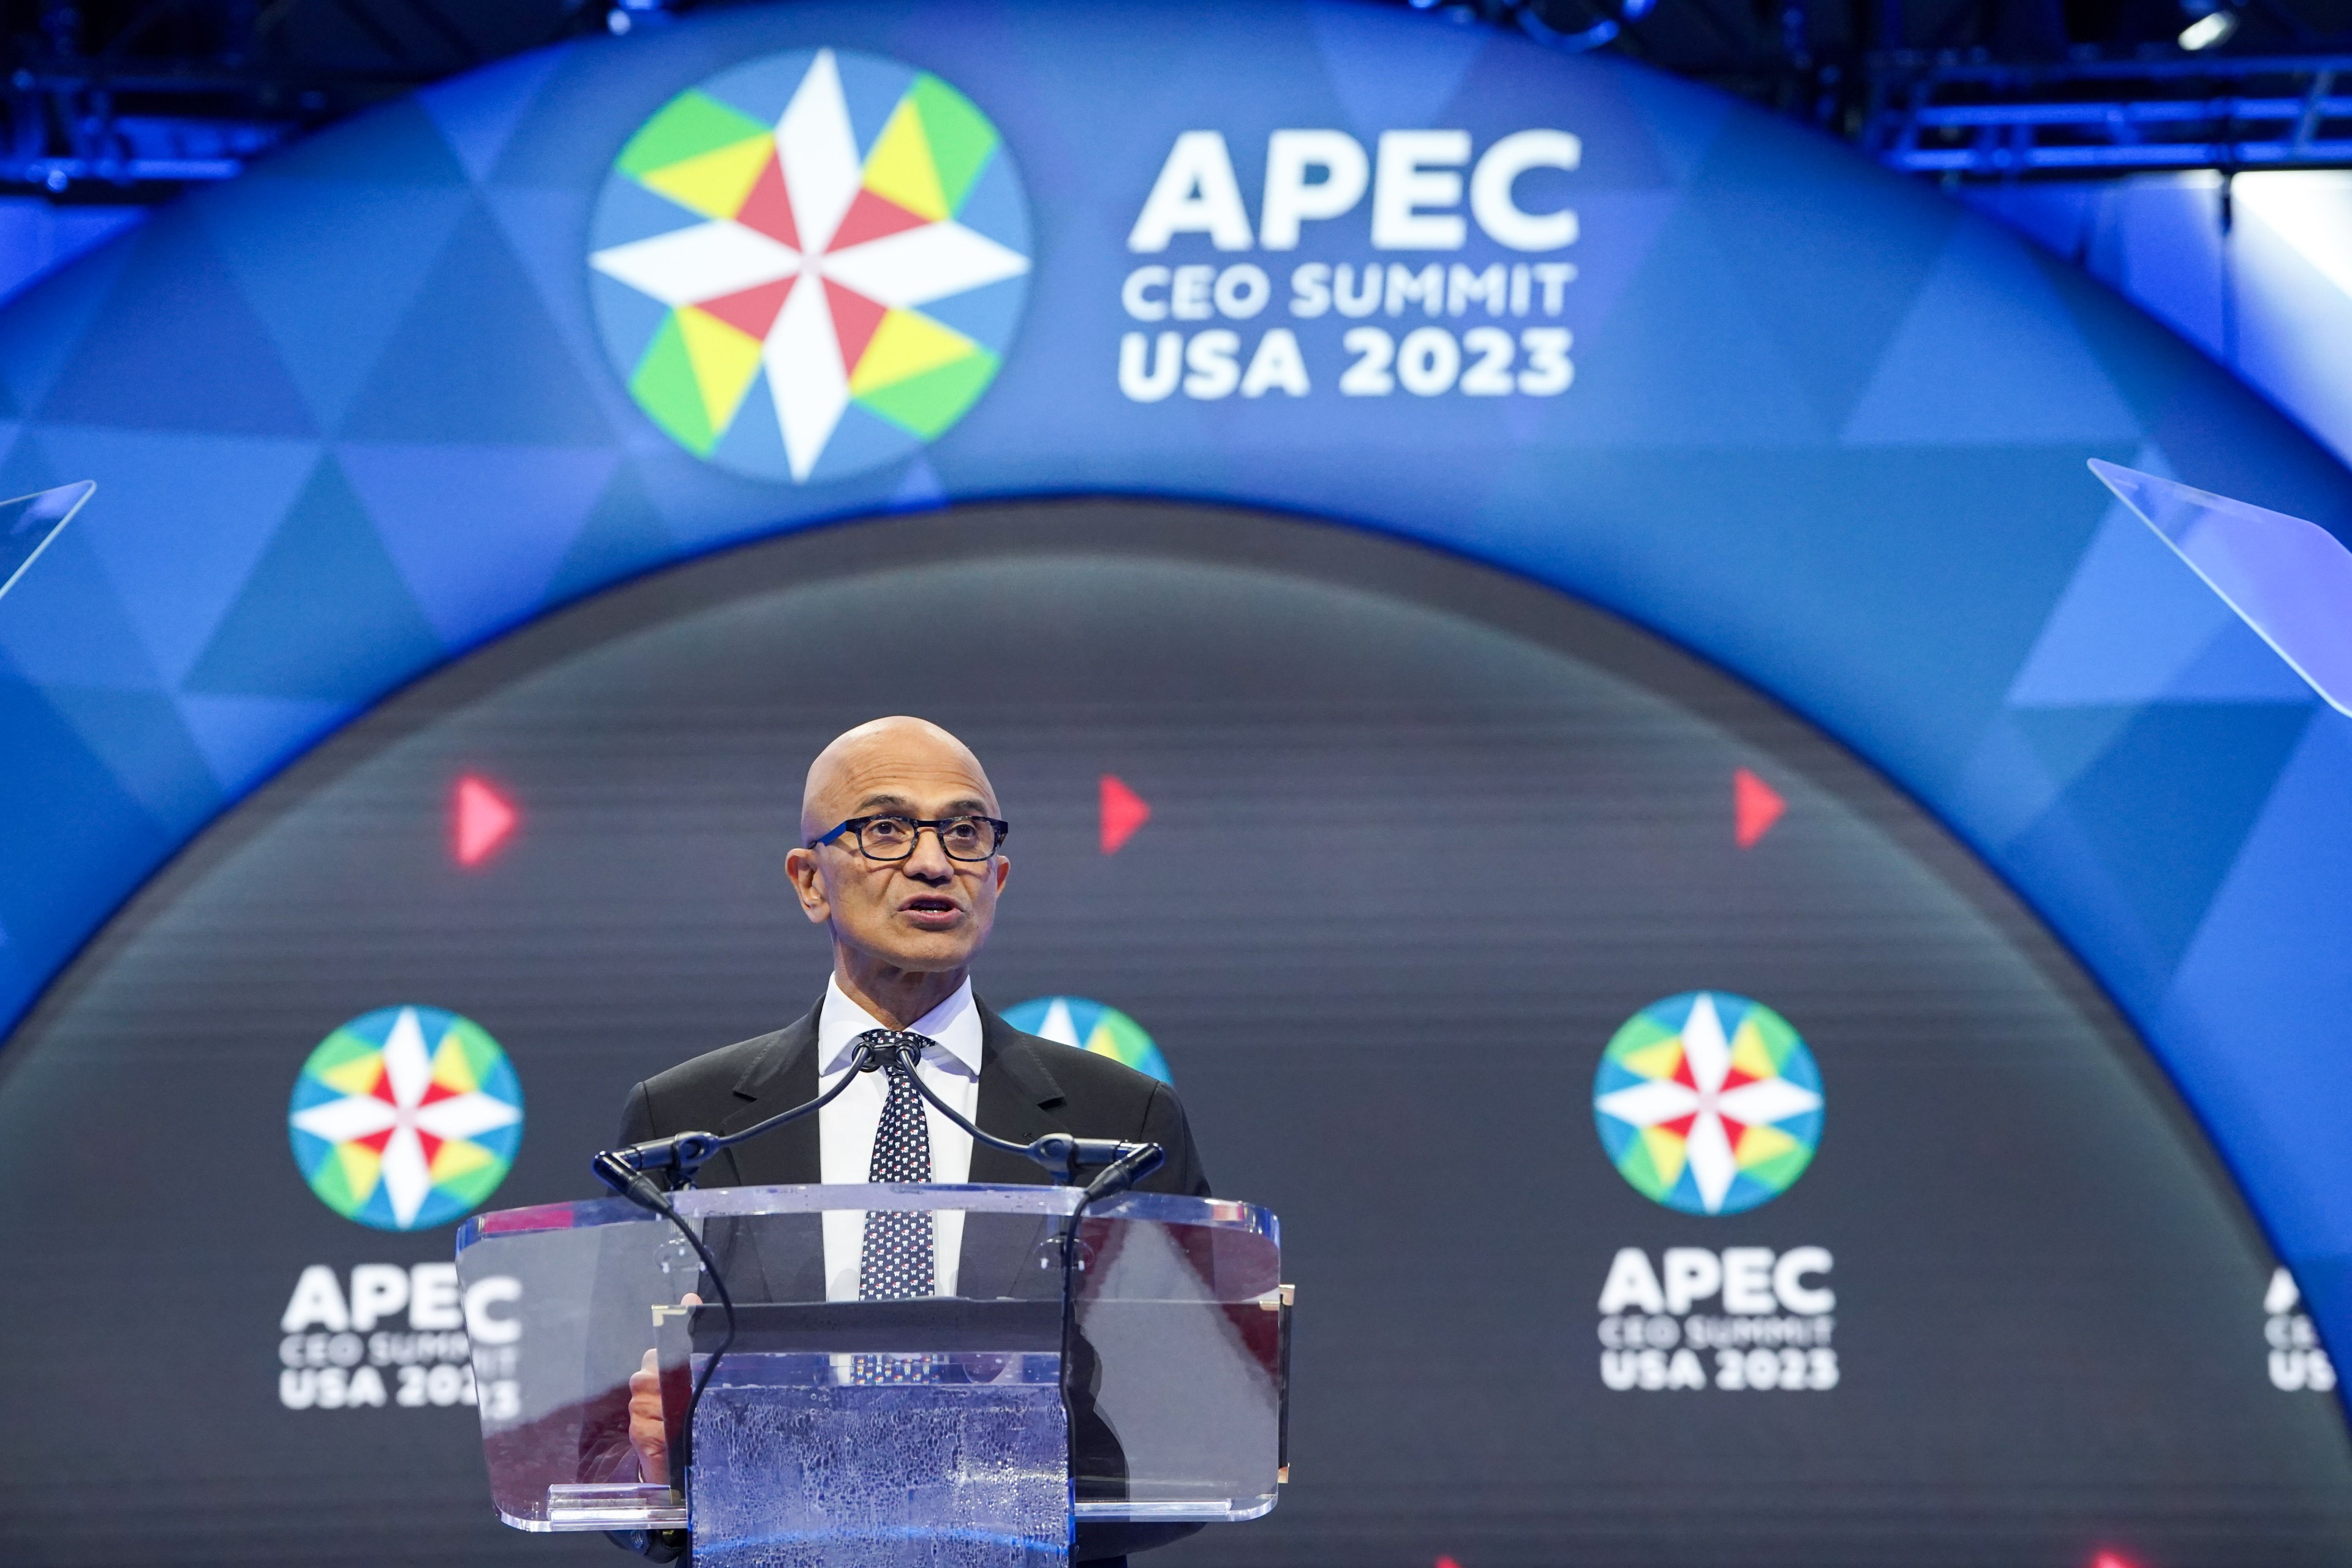 Microsoft CEO Satya Nadella speaks at a clear podium at the APEC CEO Summit in San Francisco.